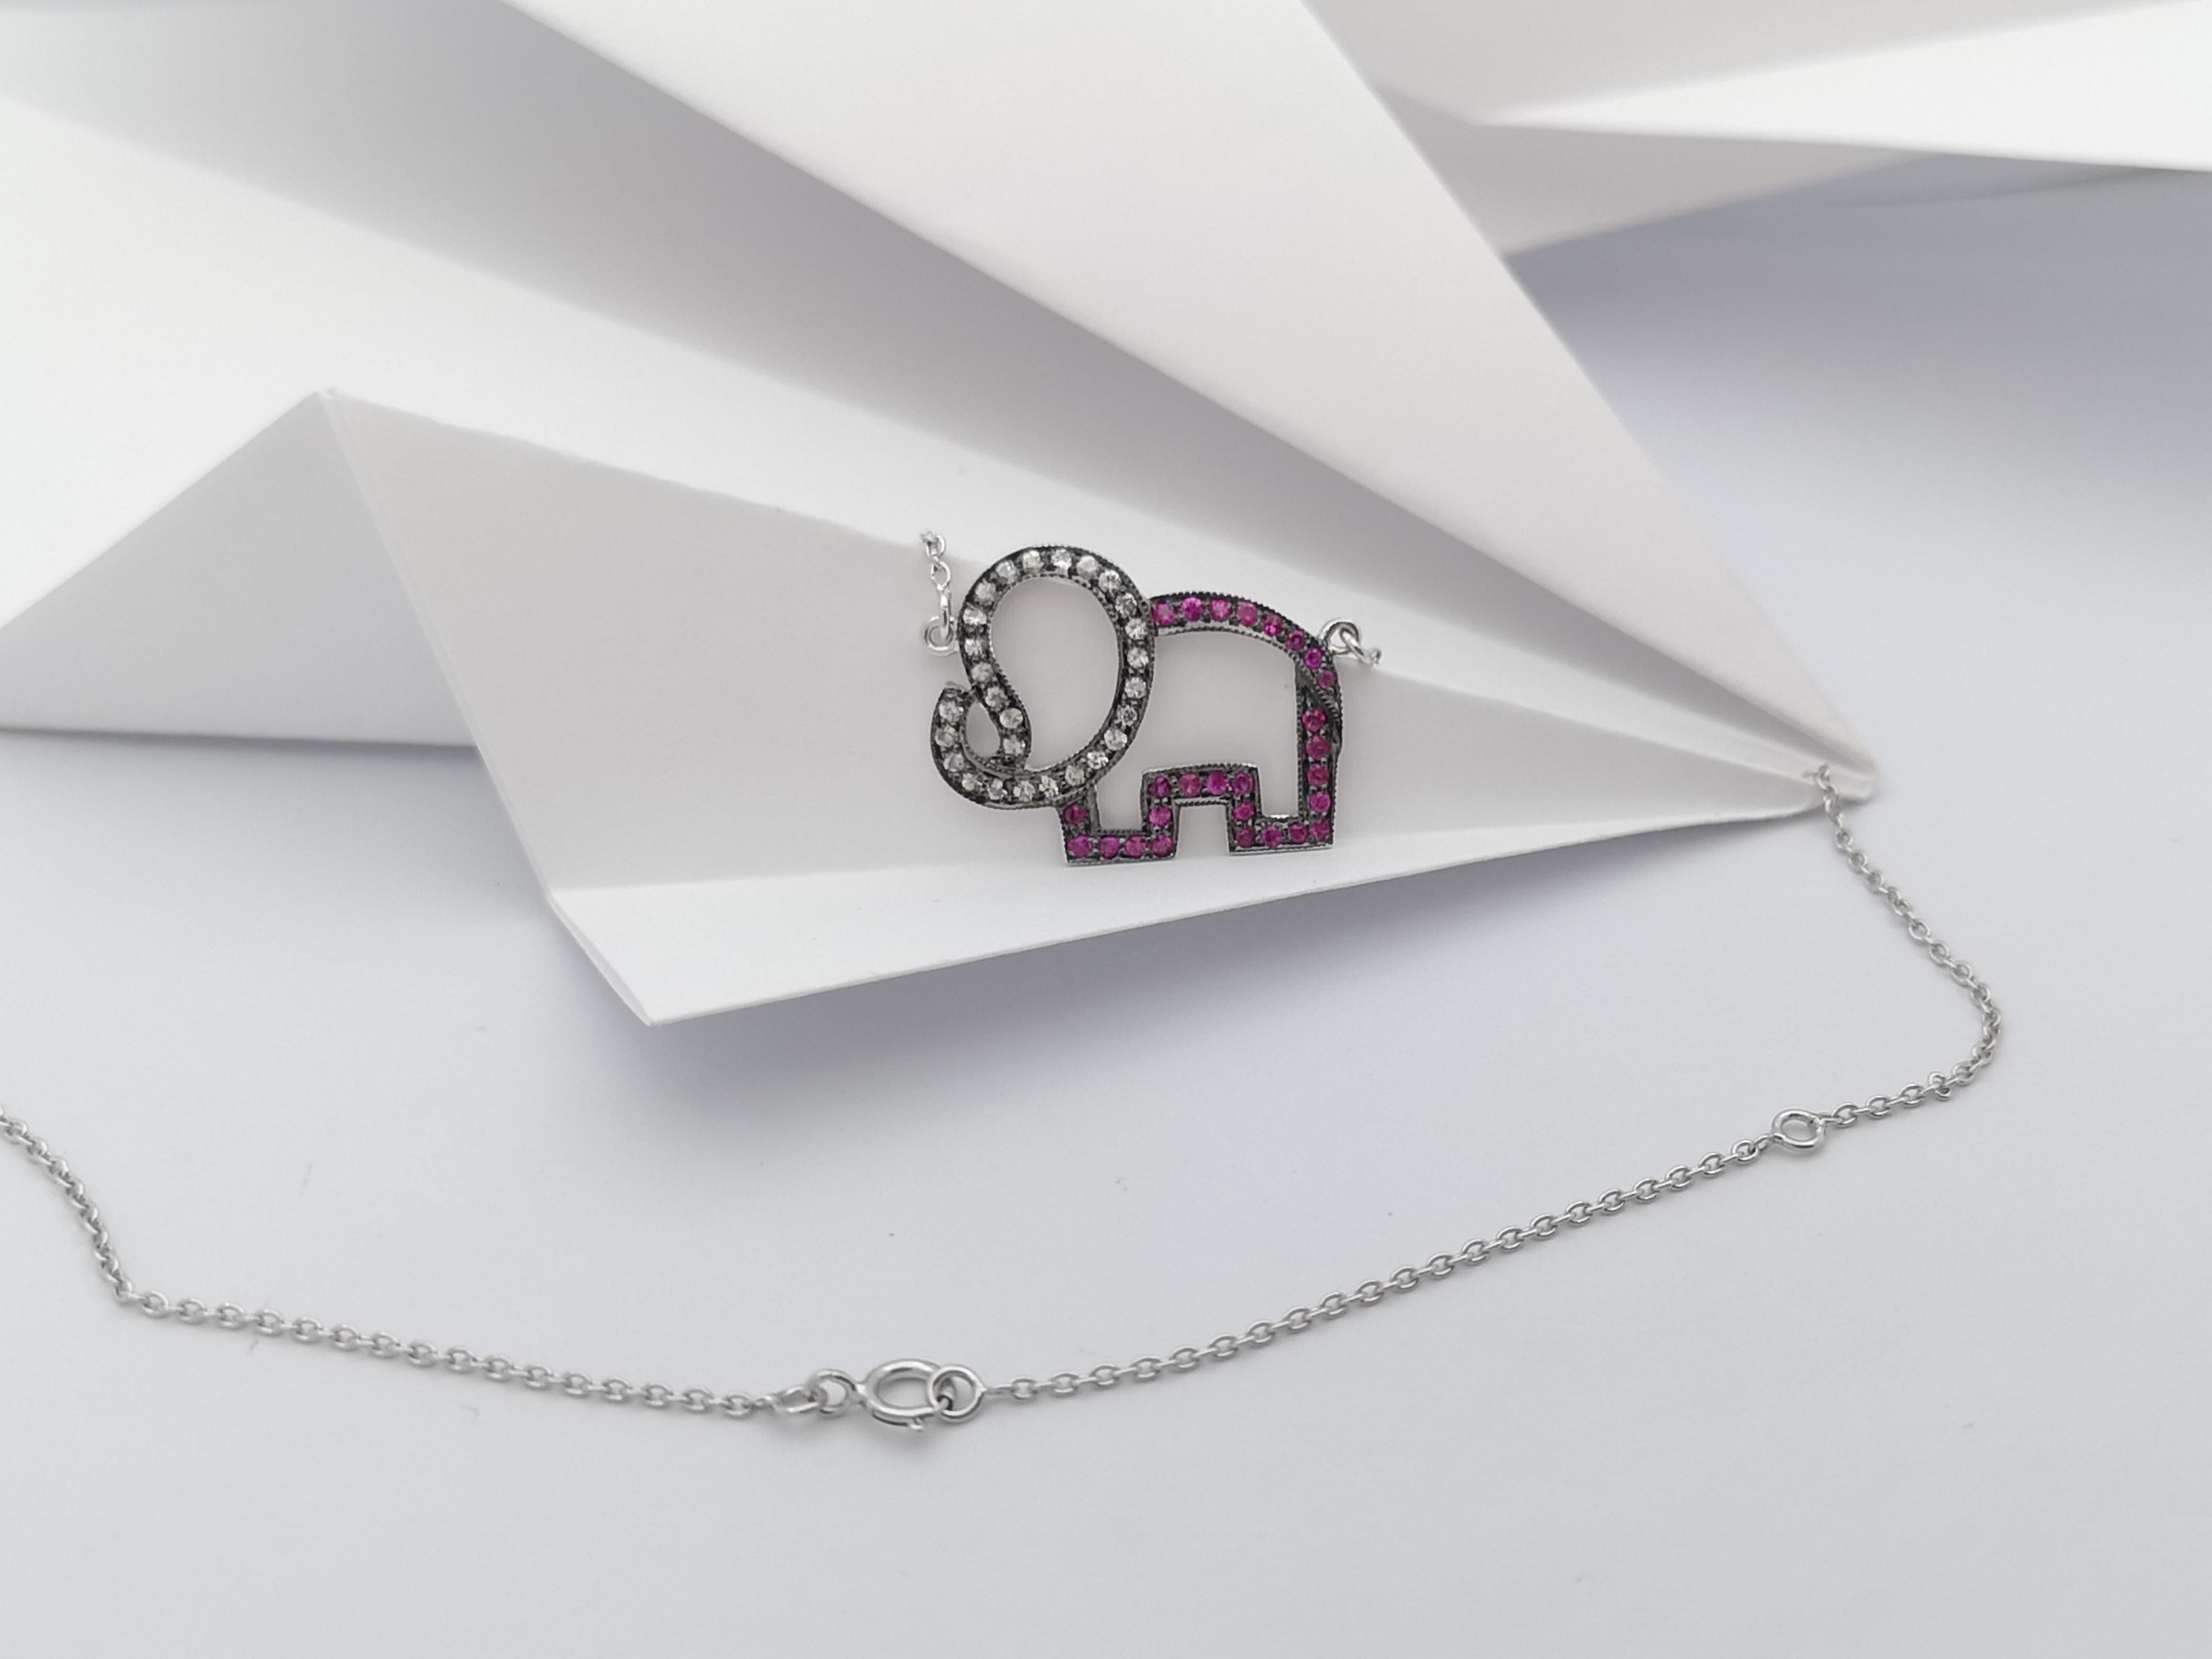 pink elephant necklace